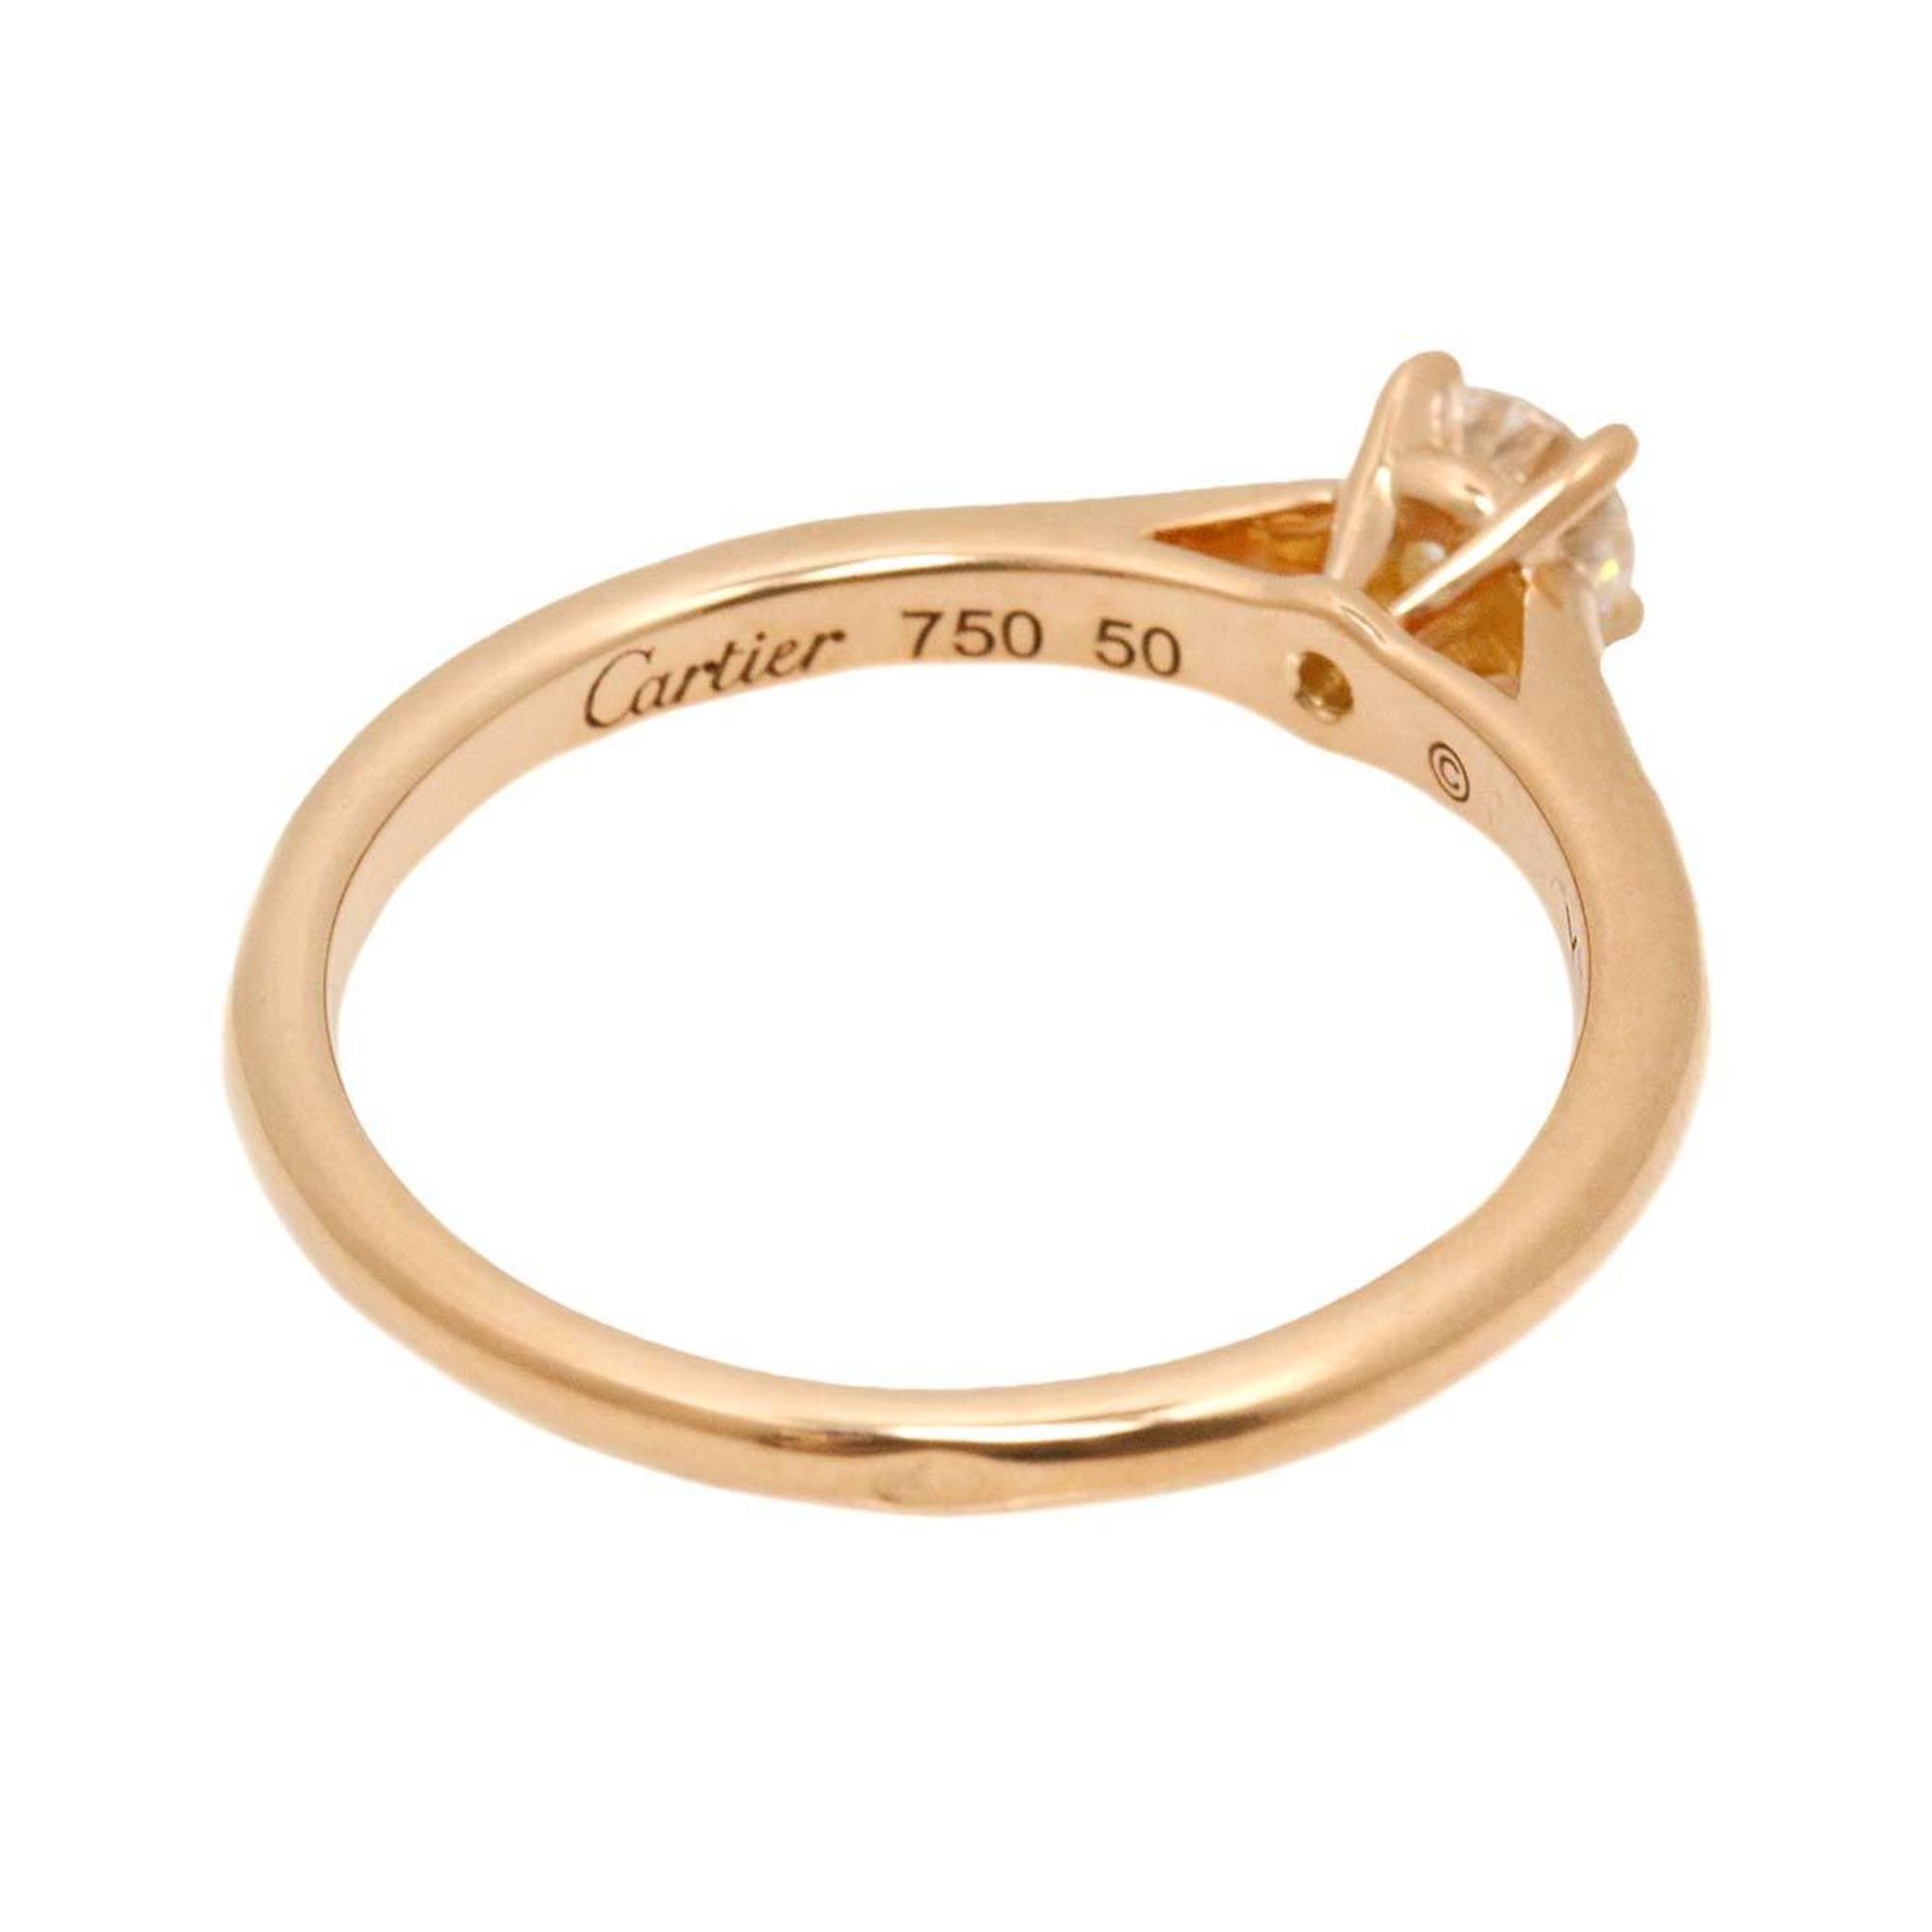 Cartier Solitaire Diamond 0.20ct E VVS1 EX #50 Ring K18 PG Pink Gold 750